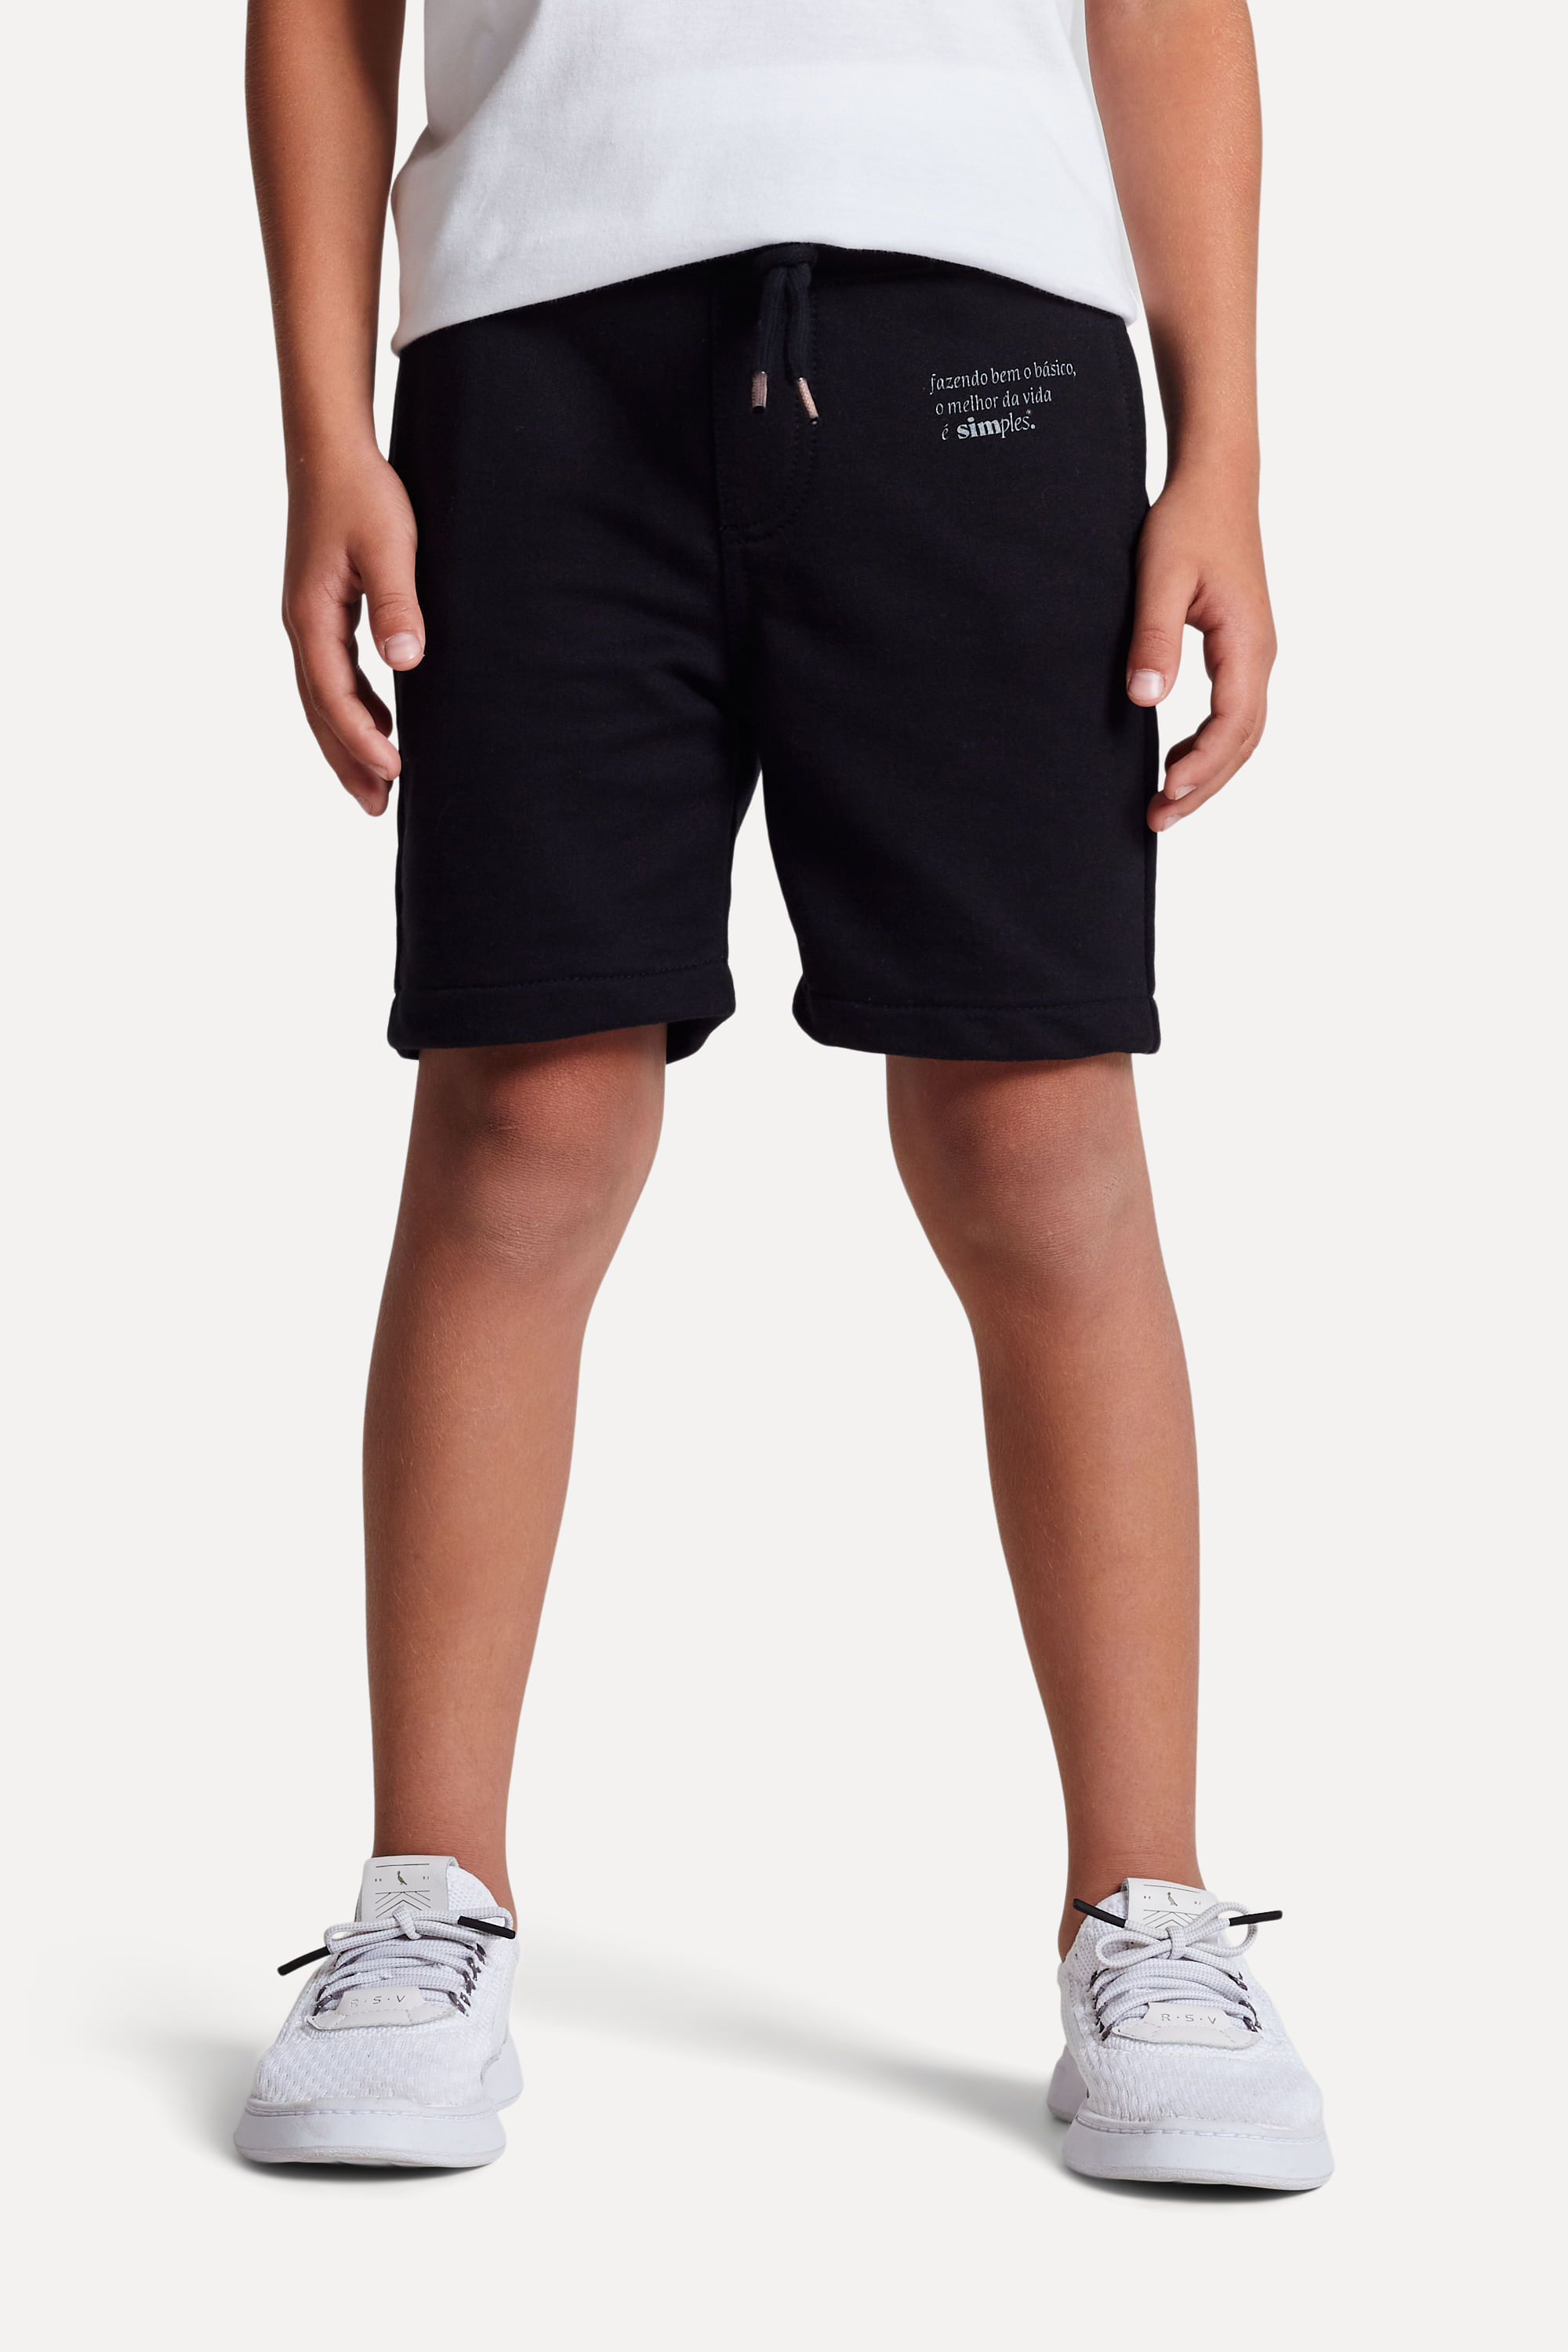 Boy Shorts for Staying In - Vida Noel